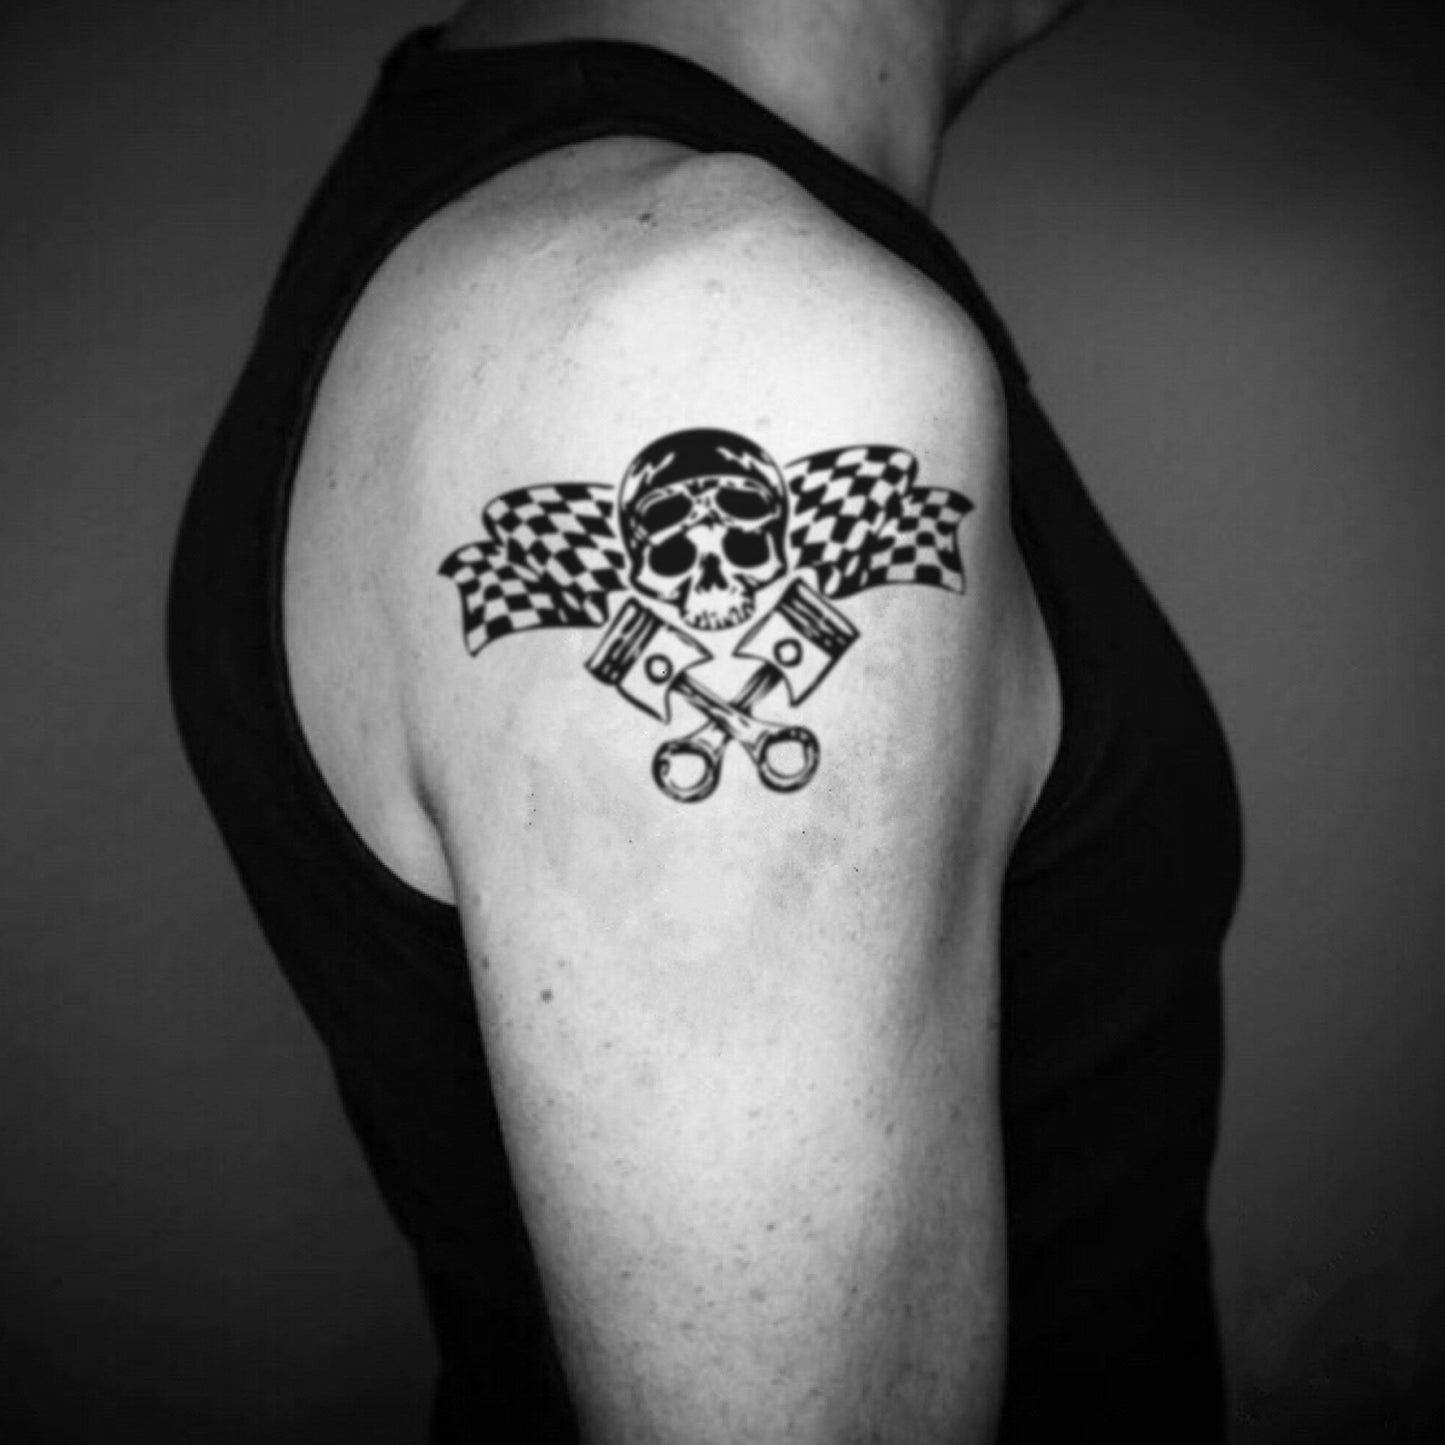 fake big outlaw biker skull old skool motorcycle club patch vintage temporary tattoo sticker design idea on upper arm